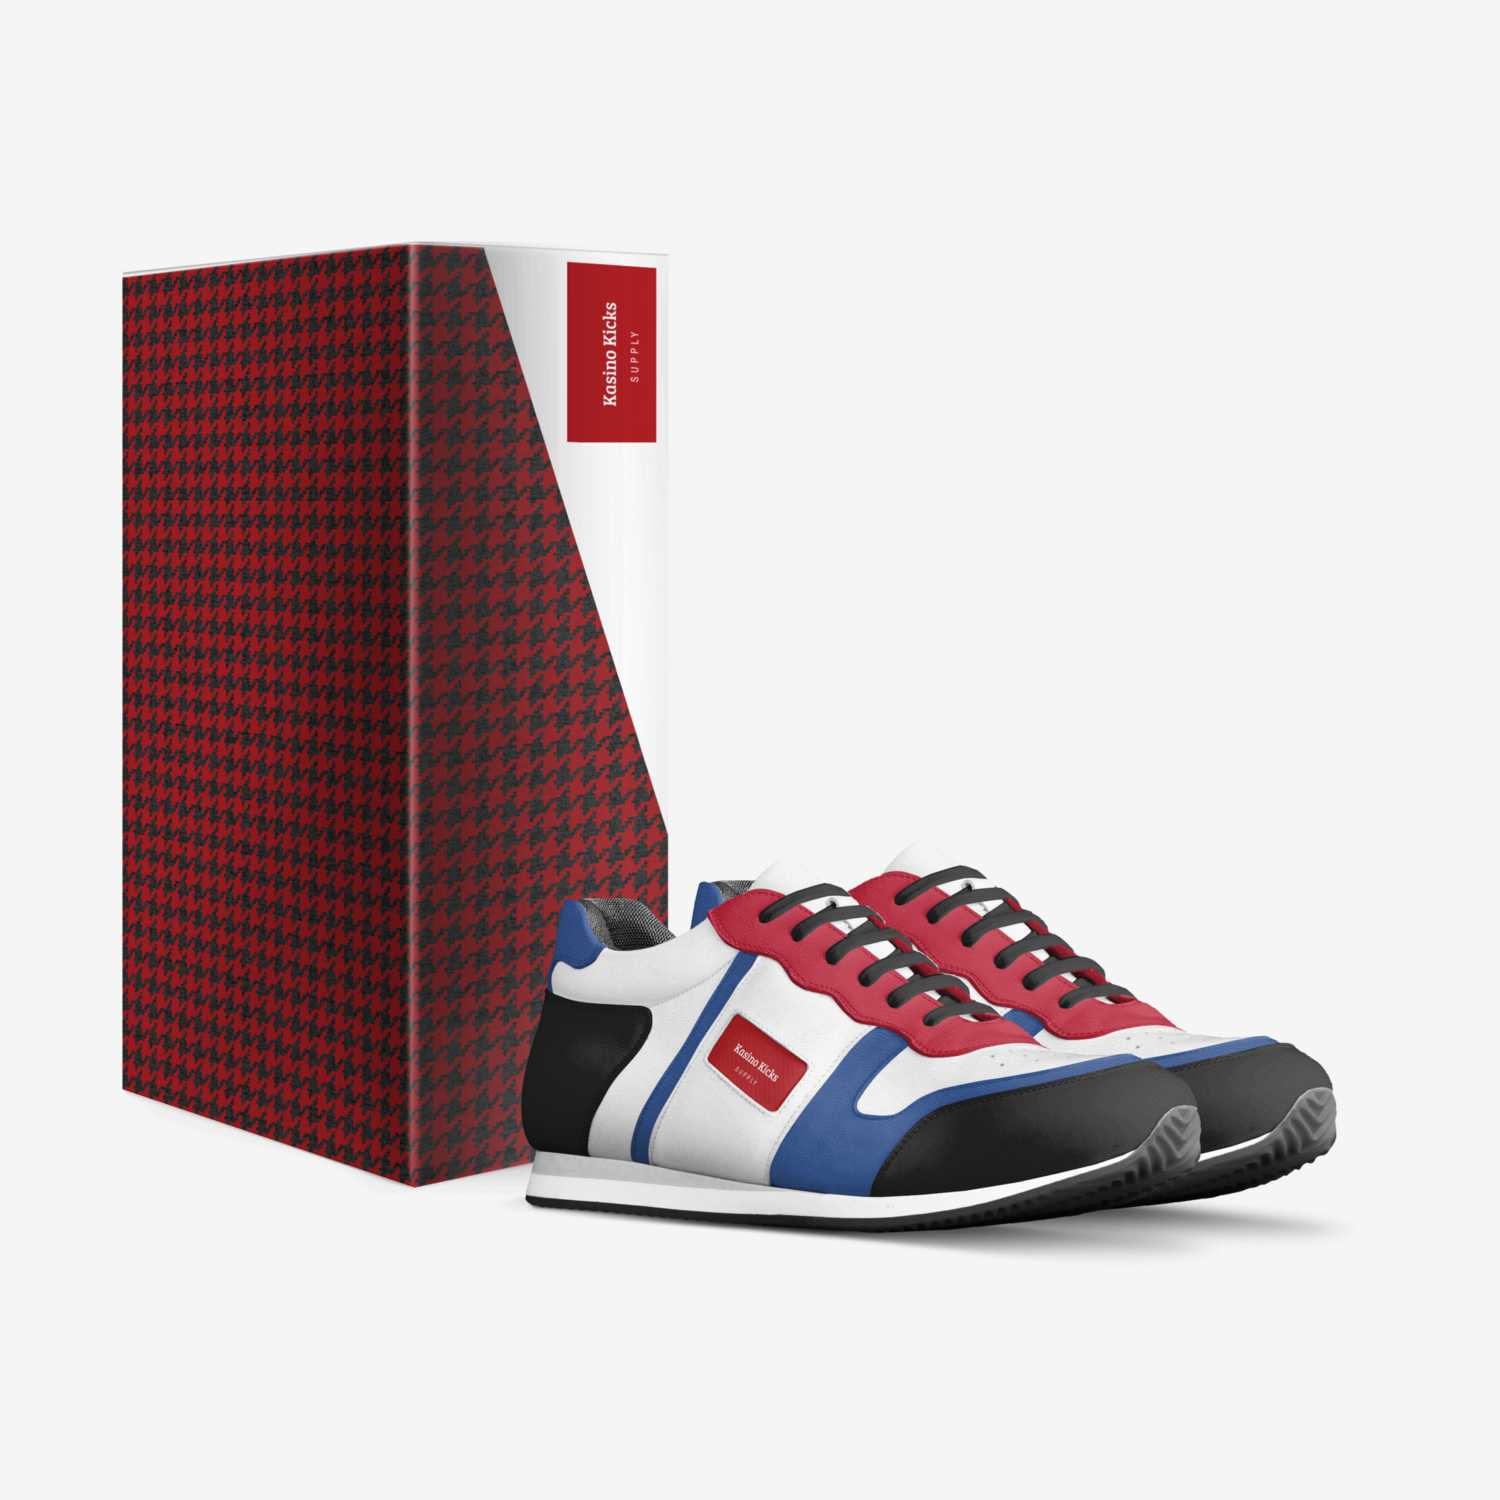 Kasino Kicks custom made in Italy shoes by Brendan Hynes | Box view